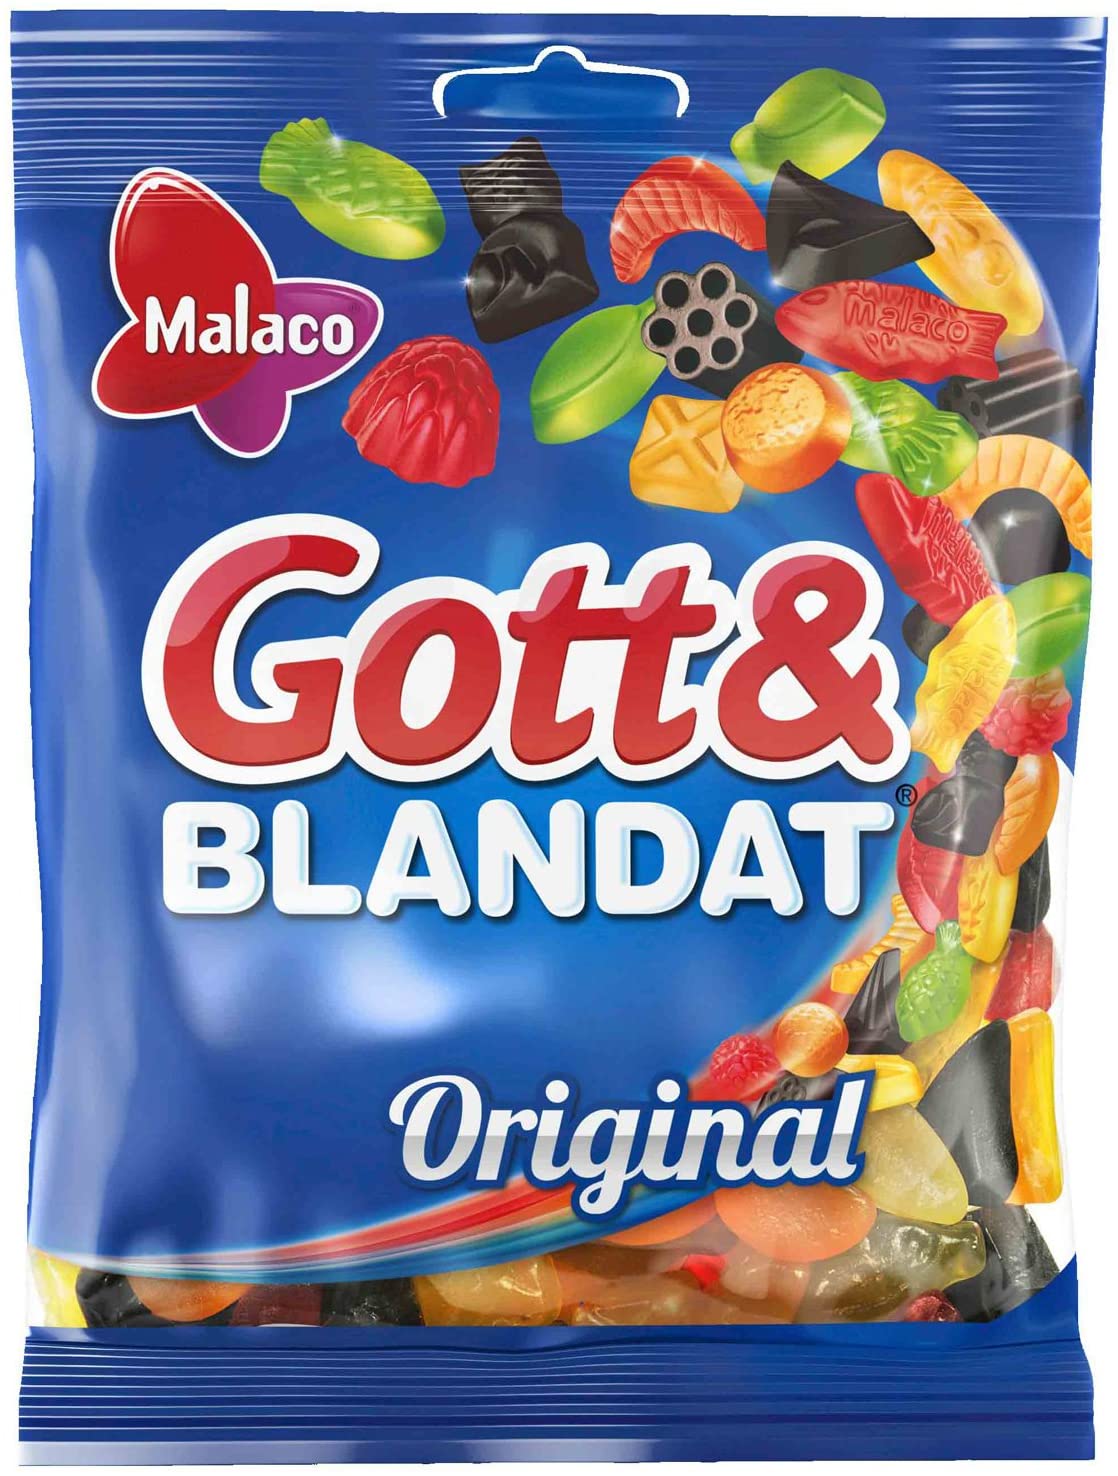 Godispåse - Gott & Blandat Original - Mixed Candy